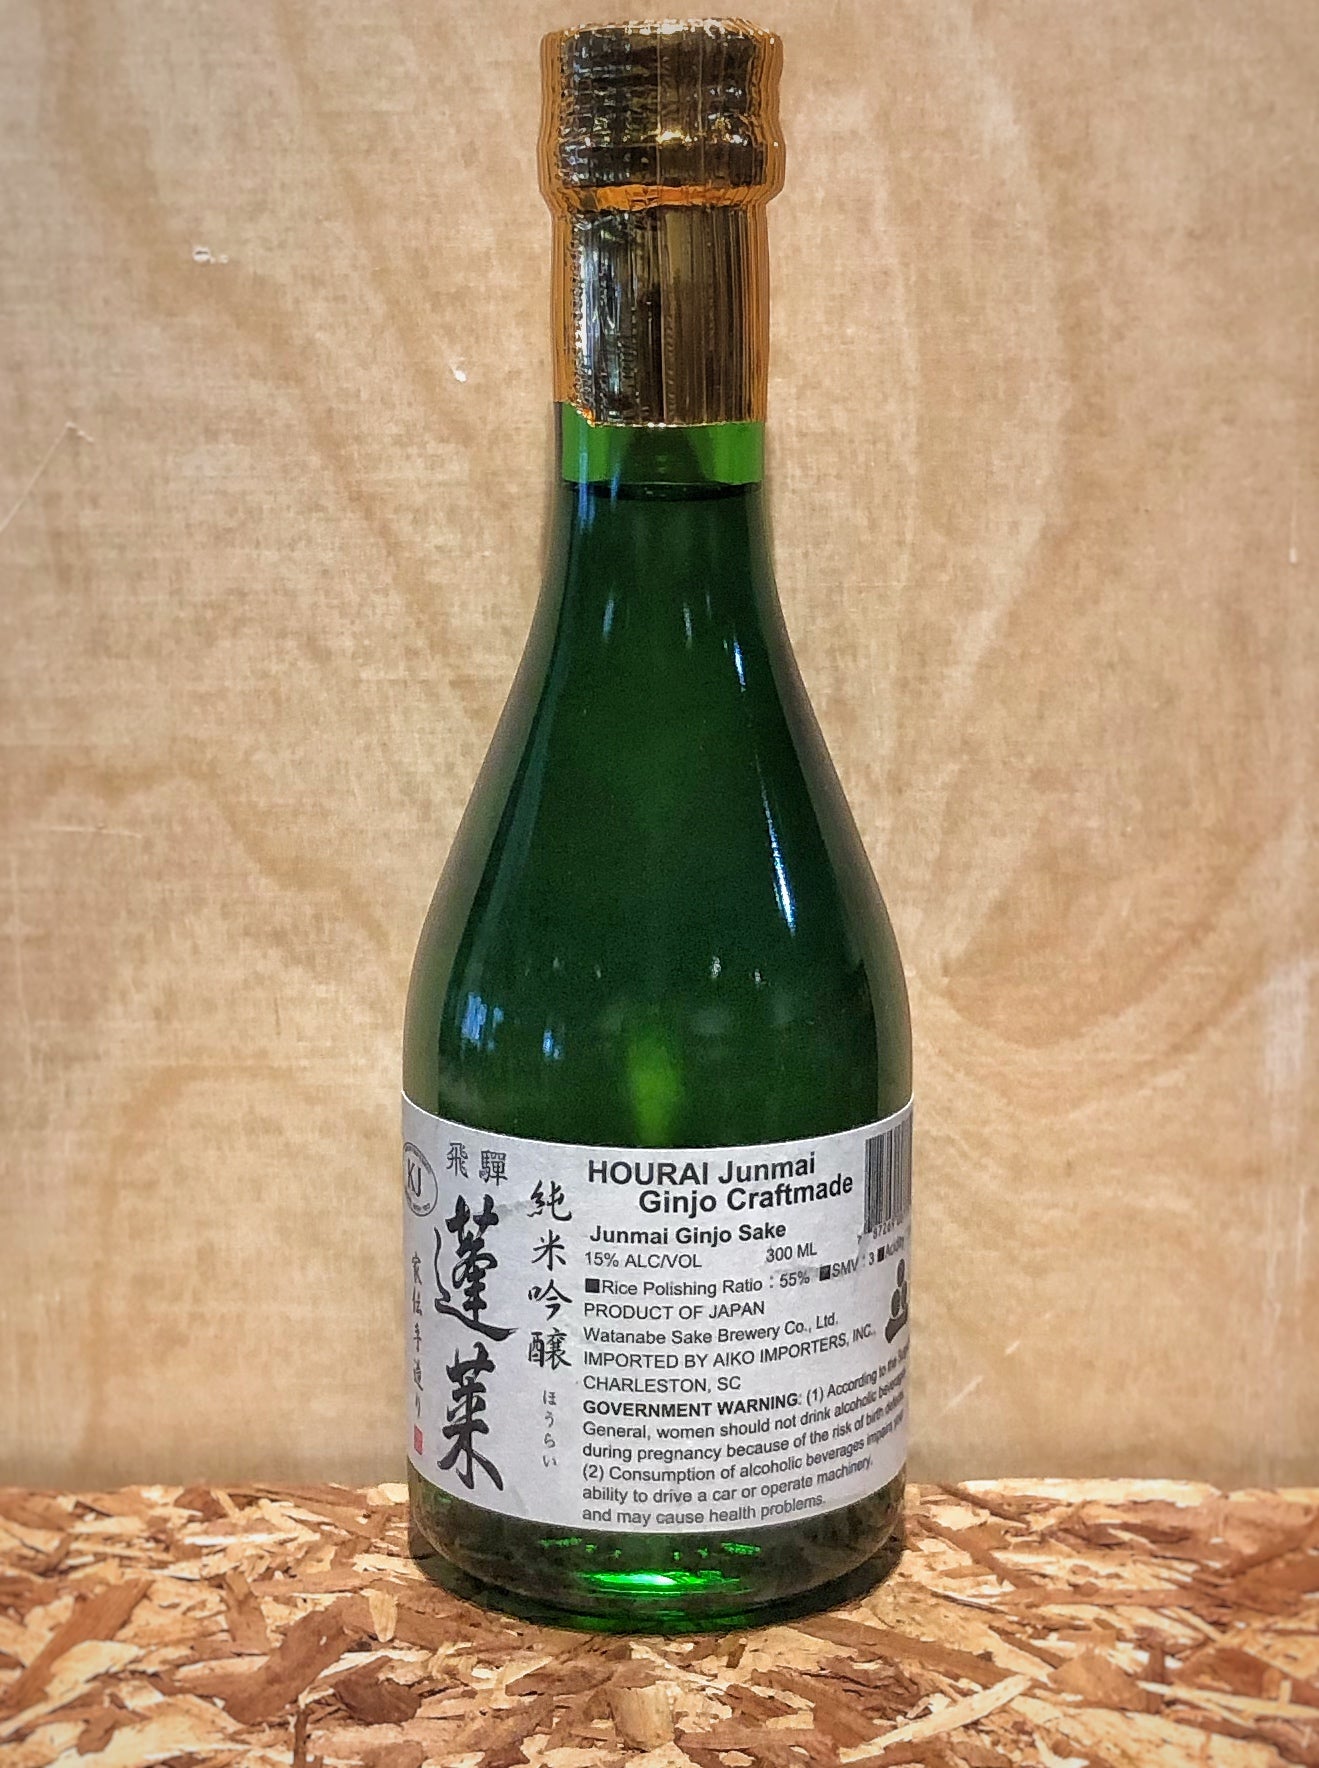 Watanabe Brewery 'Hourai' Junmai Ginjo Craftmade Sake (Hida, Japan)